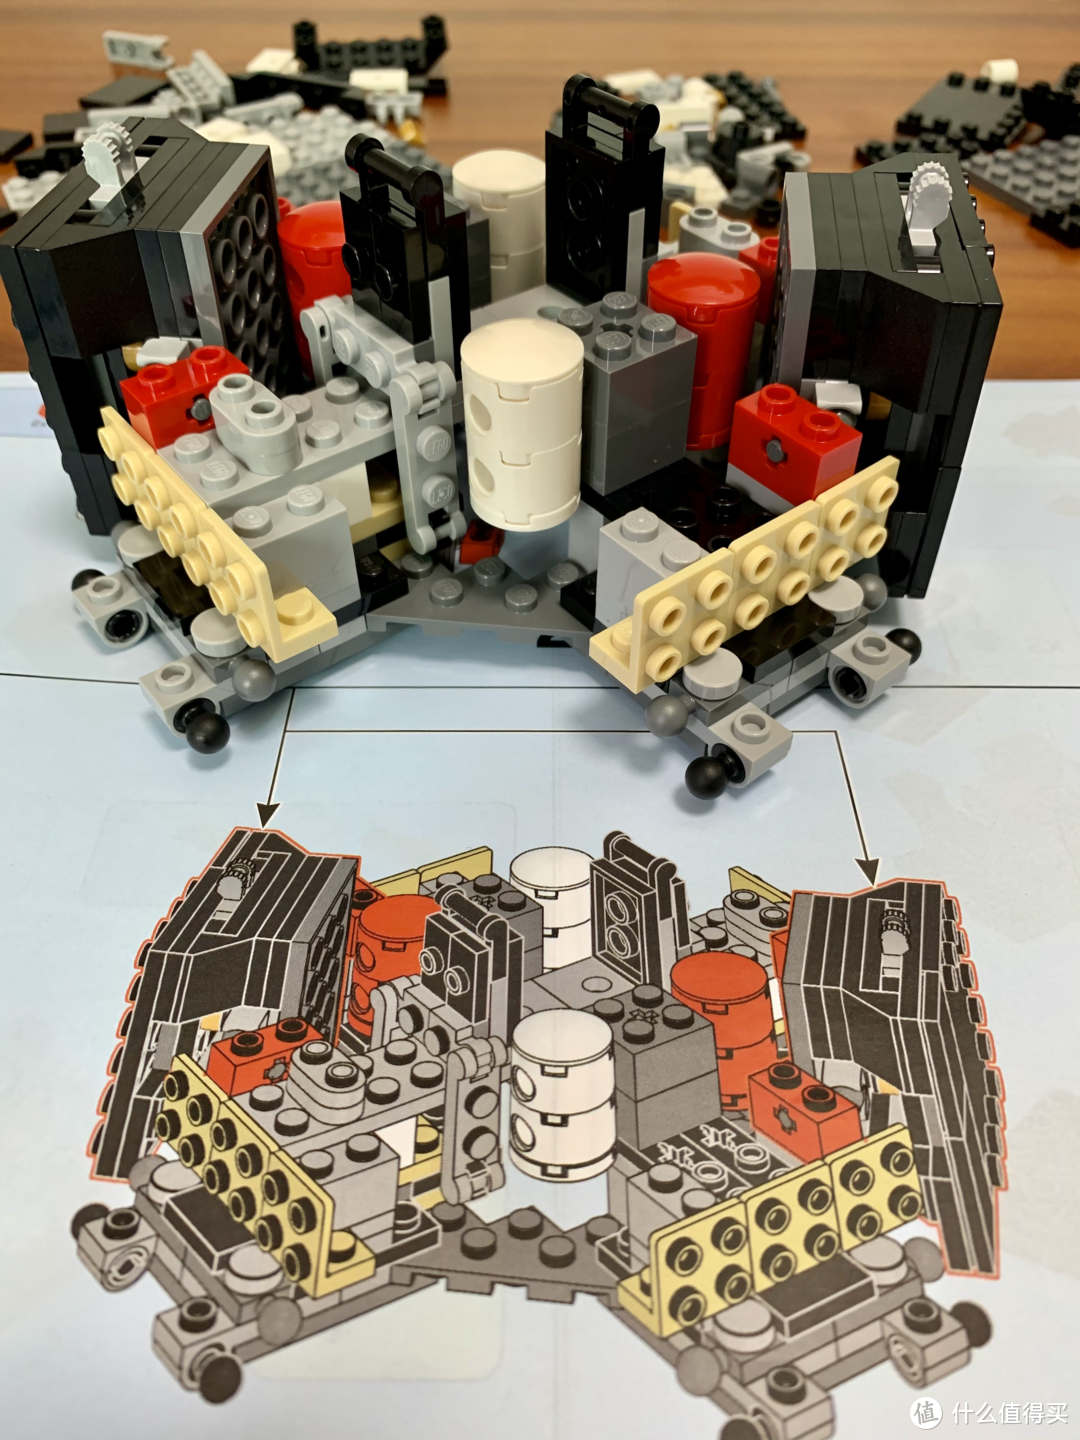 LEGO/乐高 NASA 阿波罗11号月球着陆器：这是我个人的一小步，